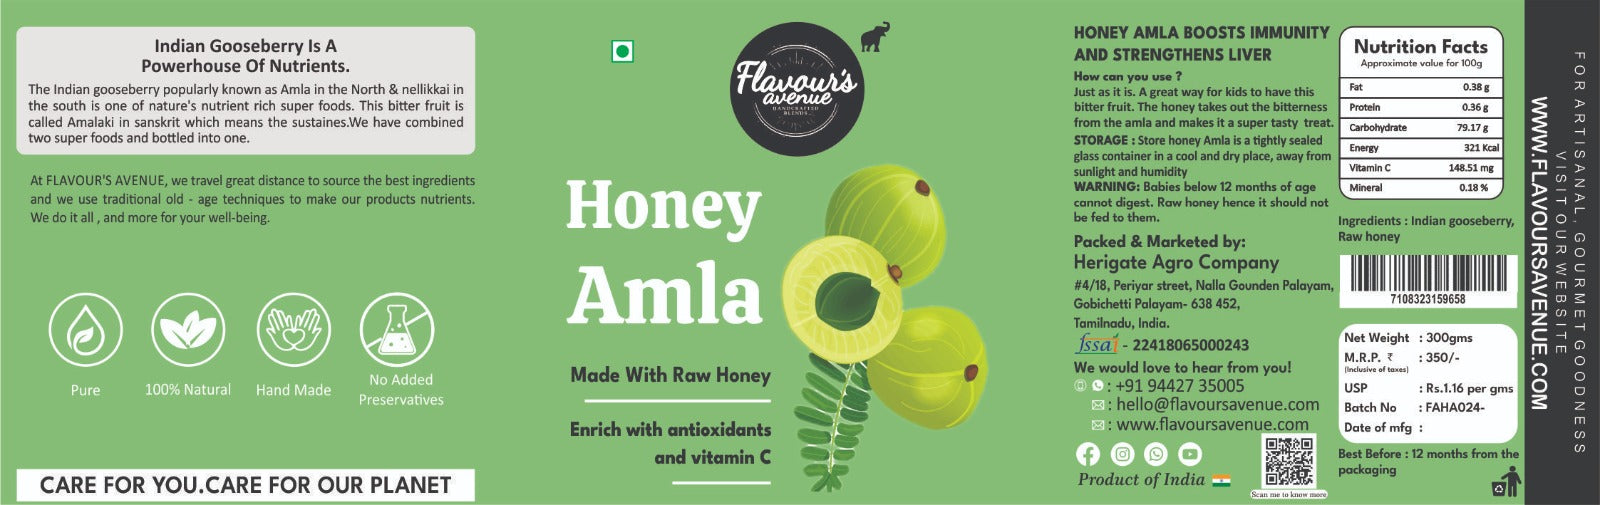 Flavours Avenue Honey Amla 300g